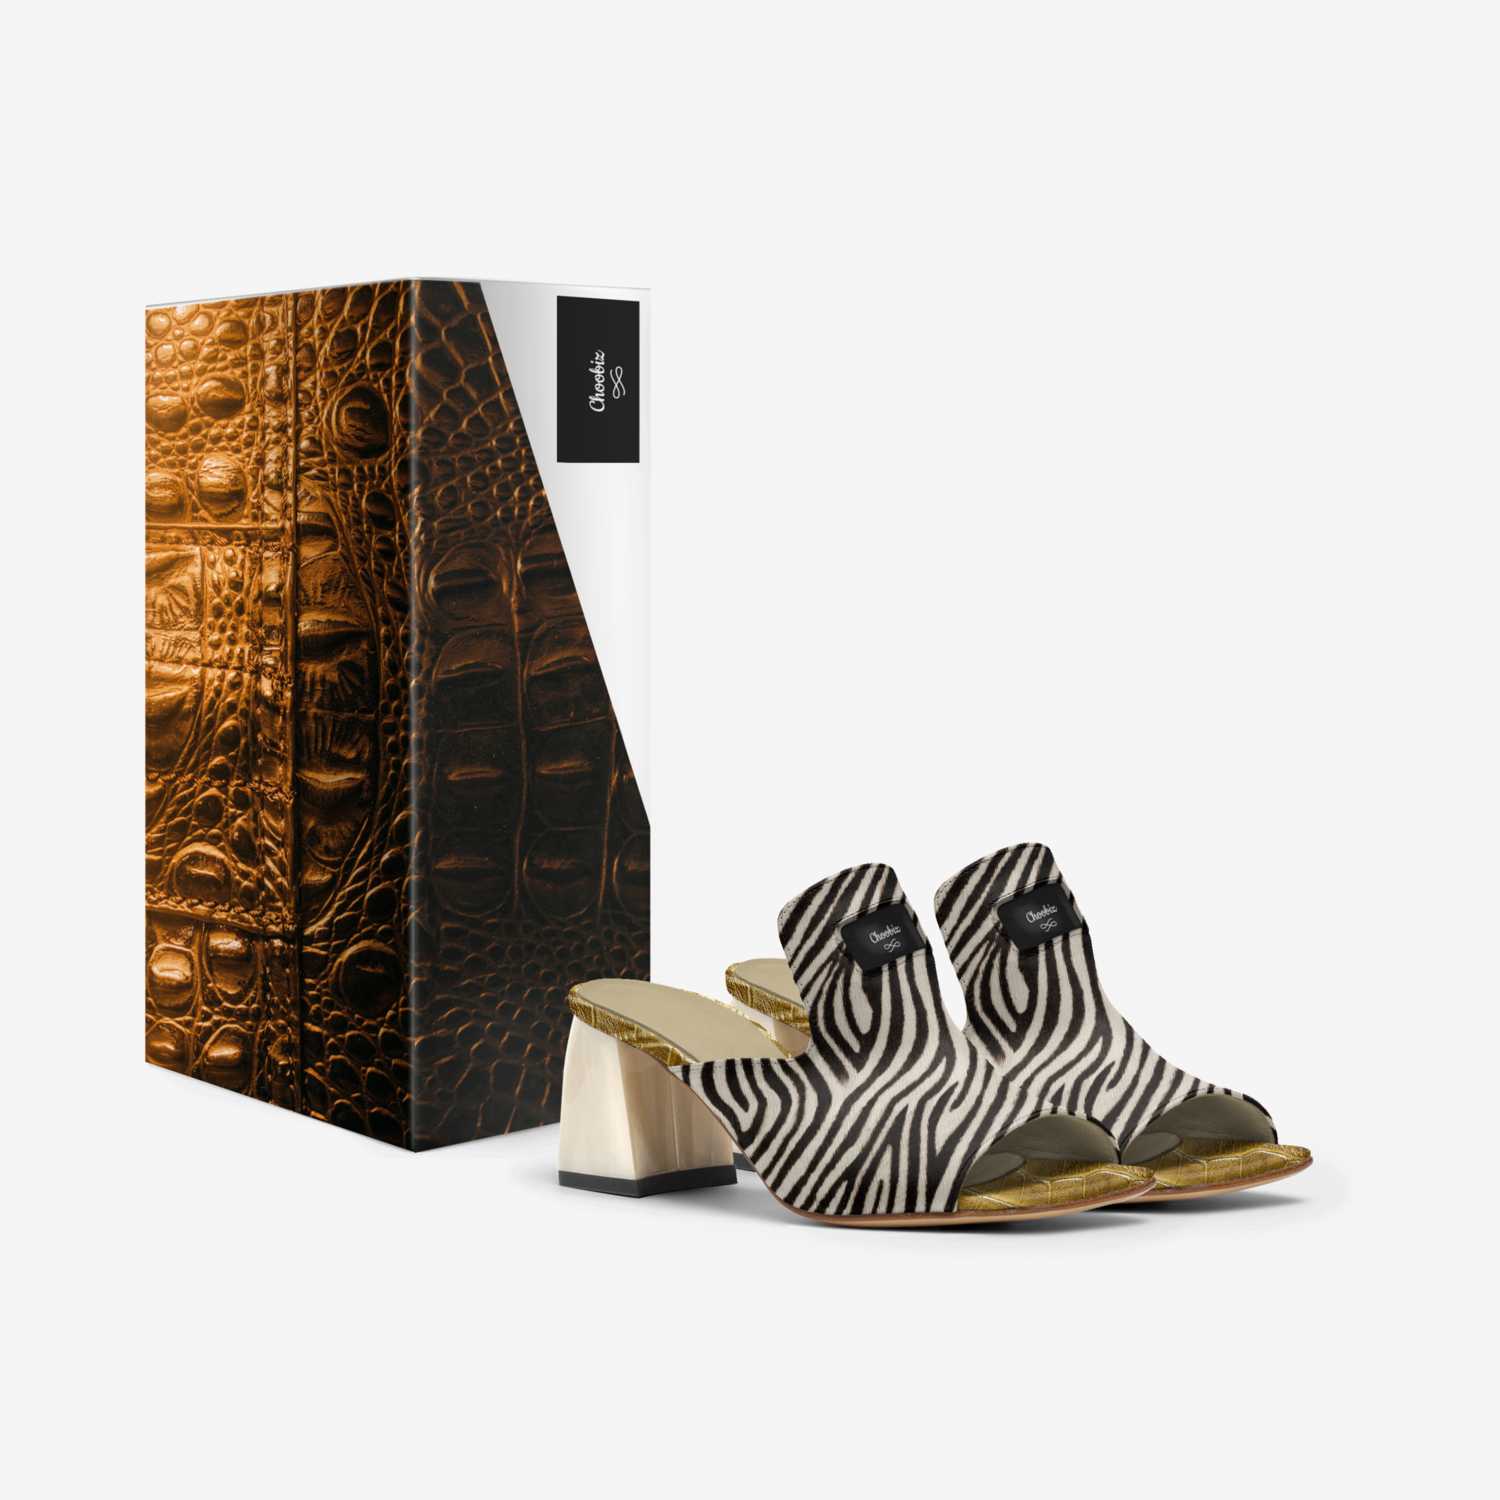 Choobiz custom made in Italy shoes by Chantal Nchako | Box view